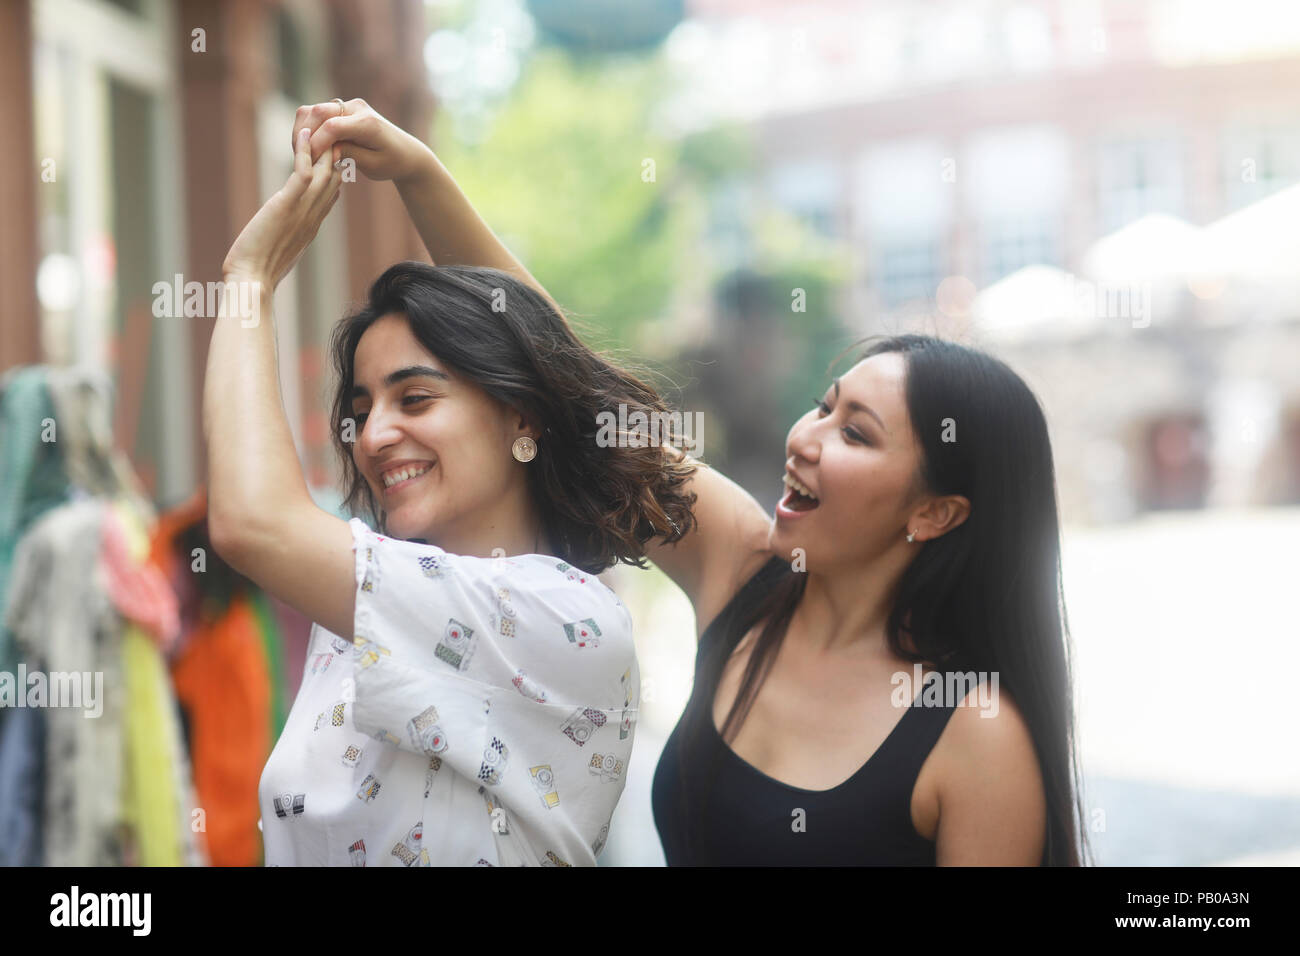 Two women standing outside a shop dancing Stock Photo